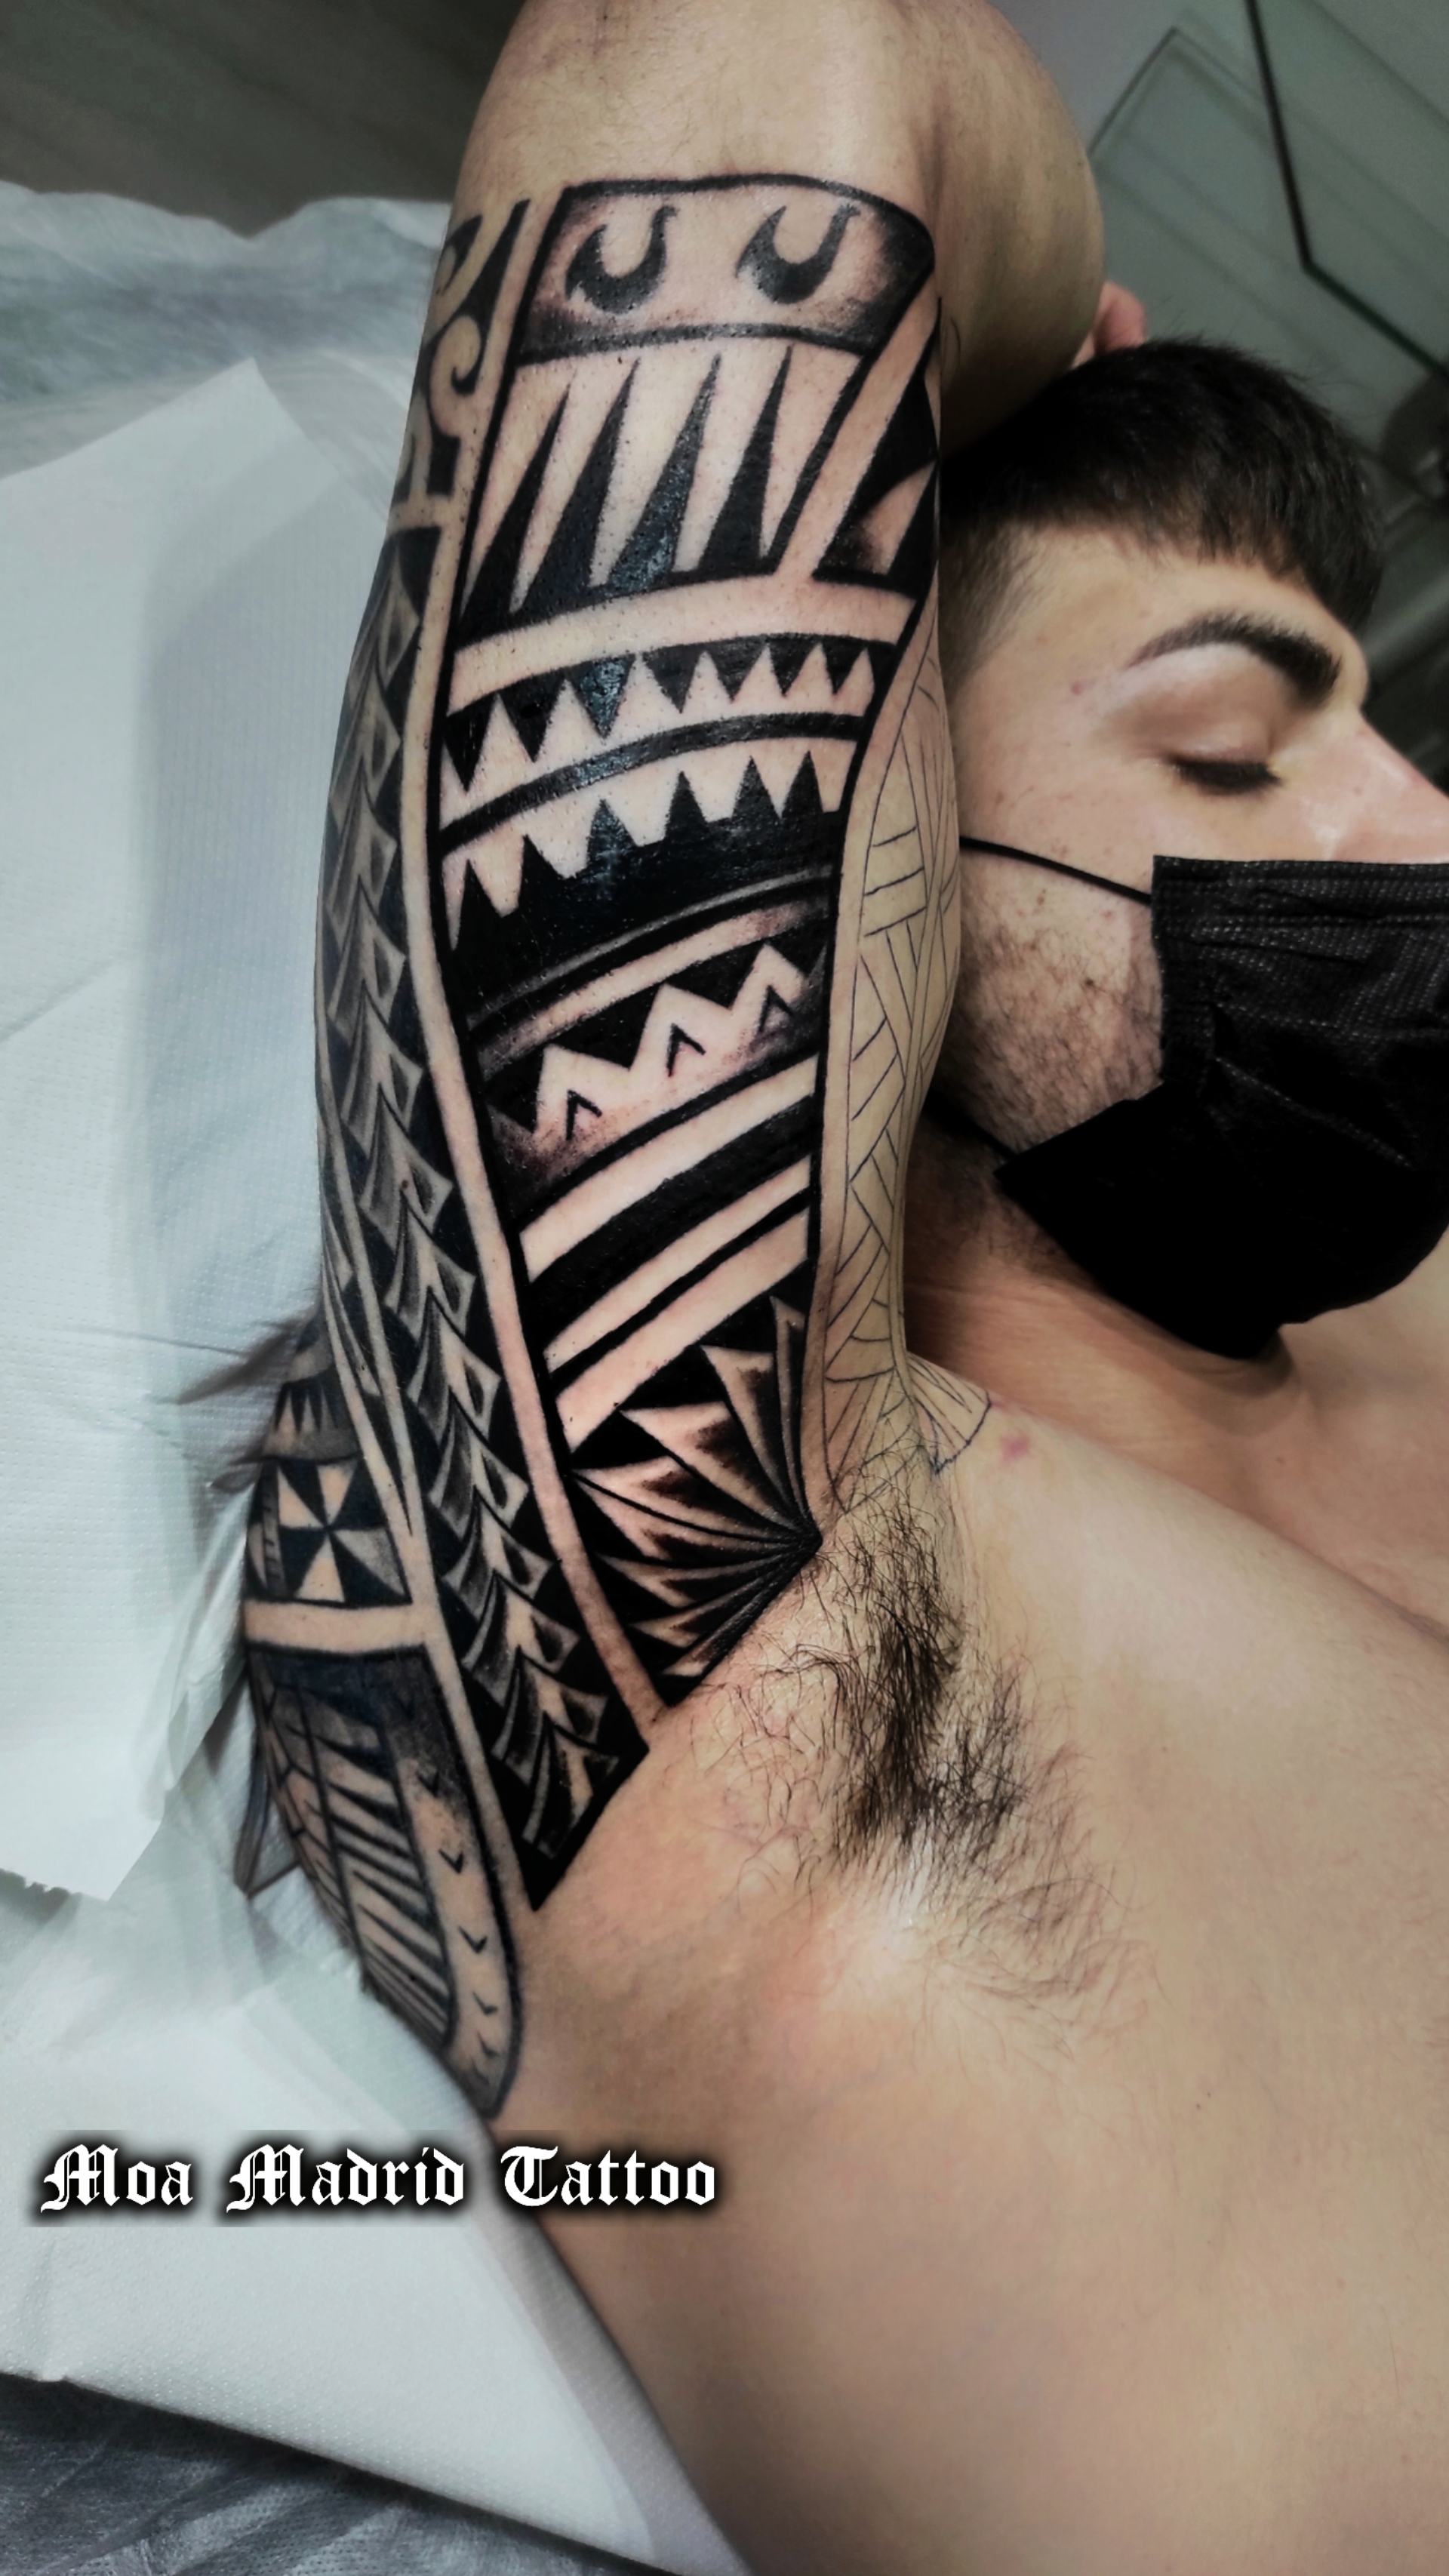 Vista del interior del brazo tatuado estilo samoano